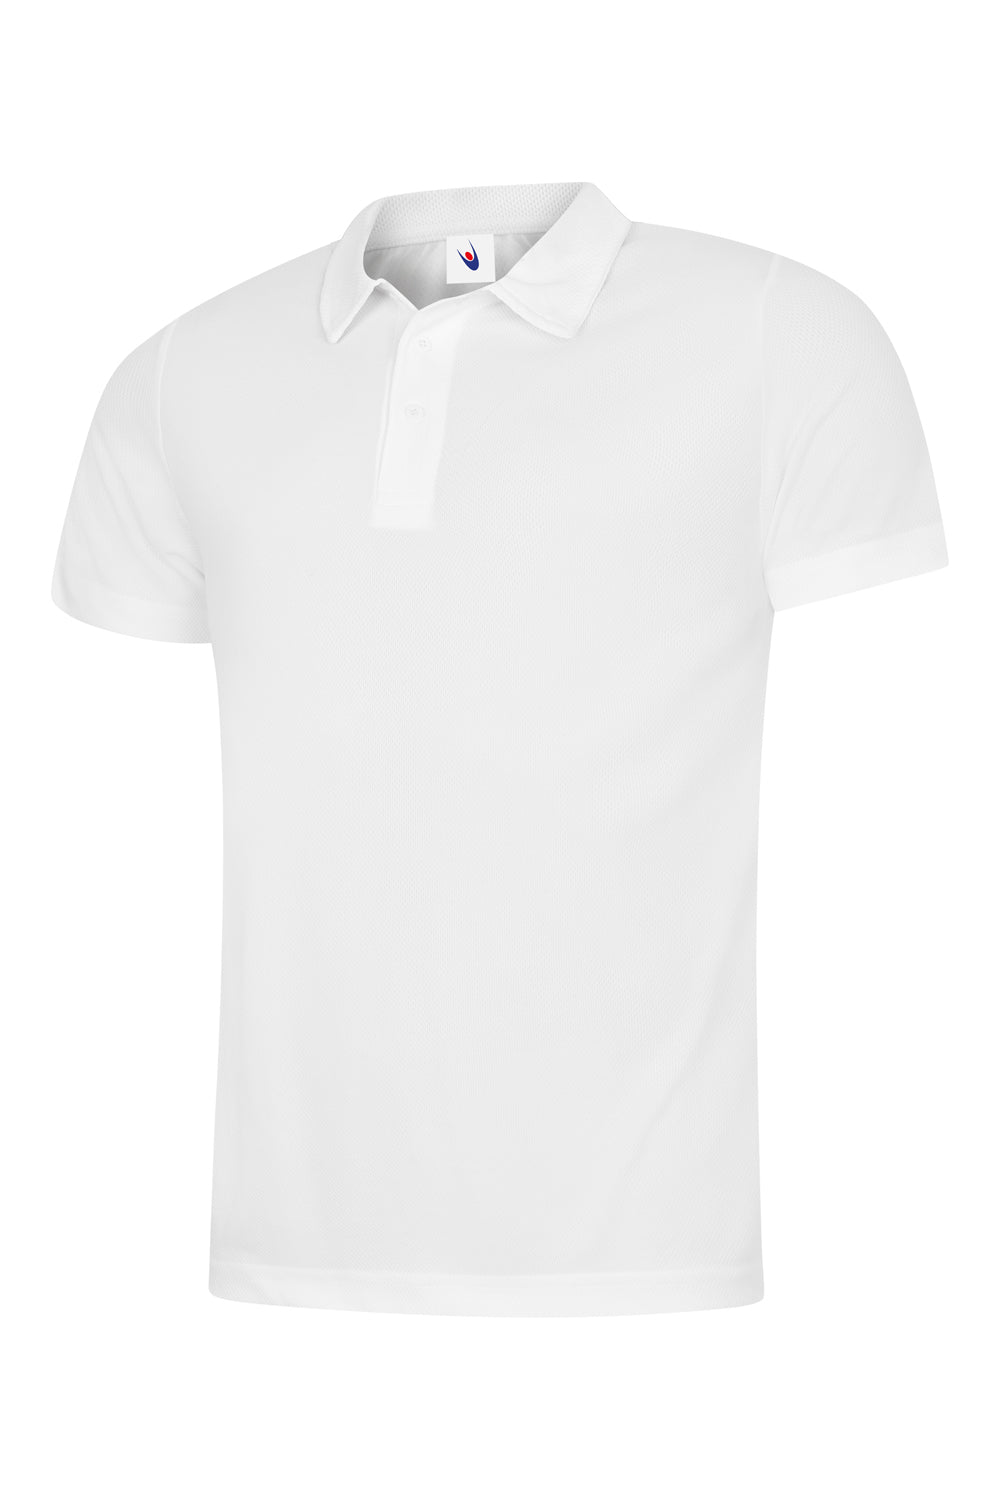 Uneek Mens Ultra Cool Poloshirt UC125 - White